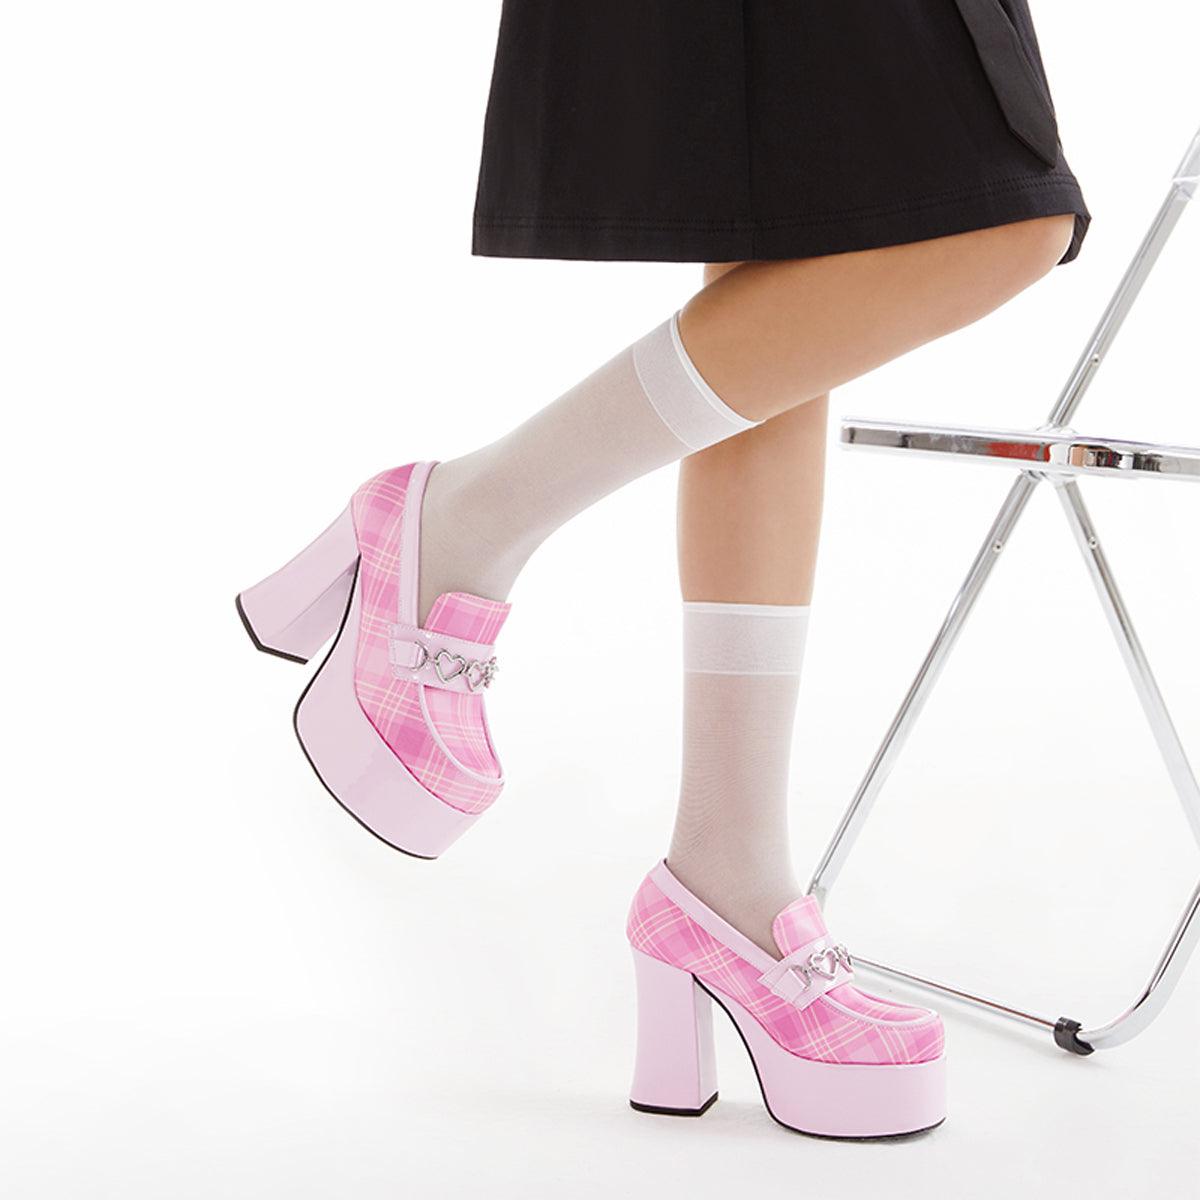 Pink Plaid Goddess Platform Heel Shoes - Aesthetic Clothes Shop